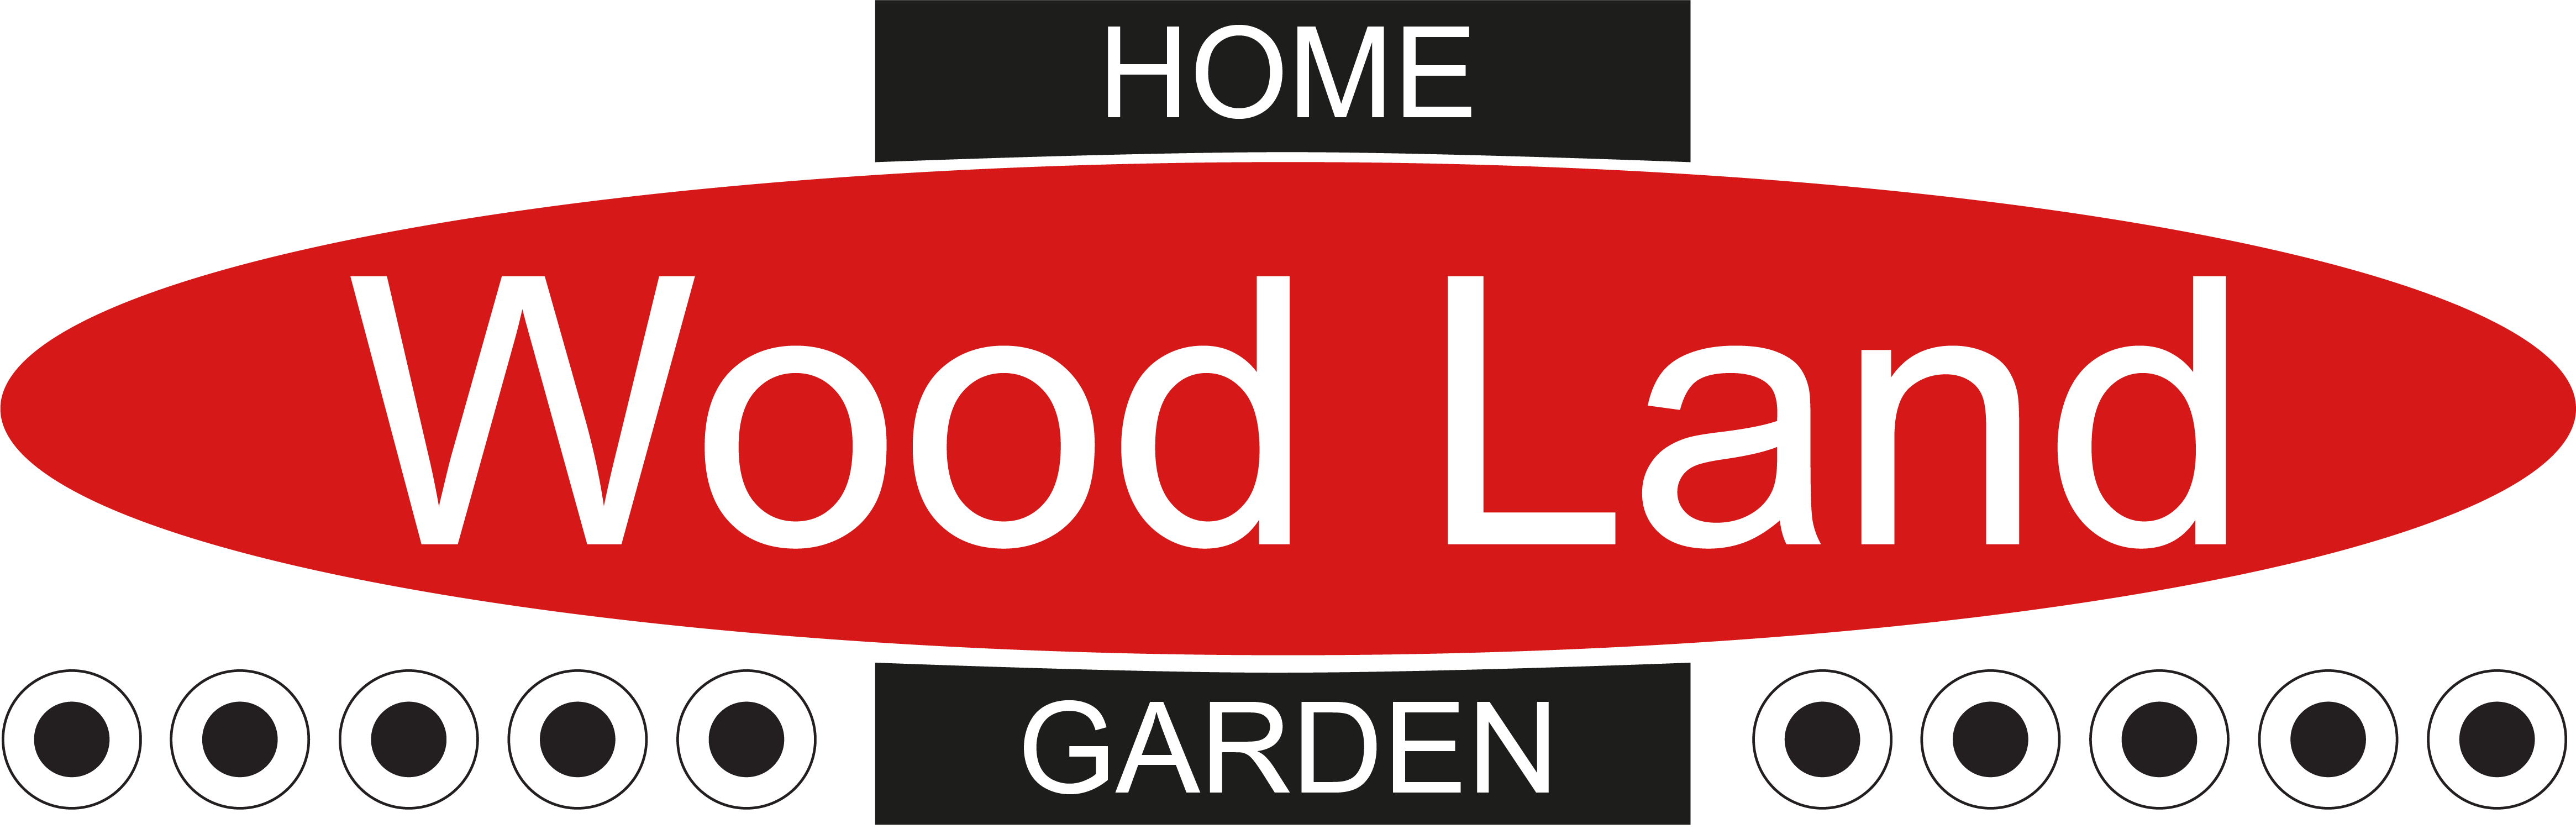 Wood land Logo